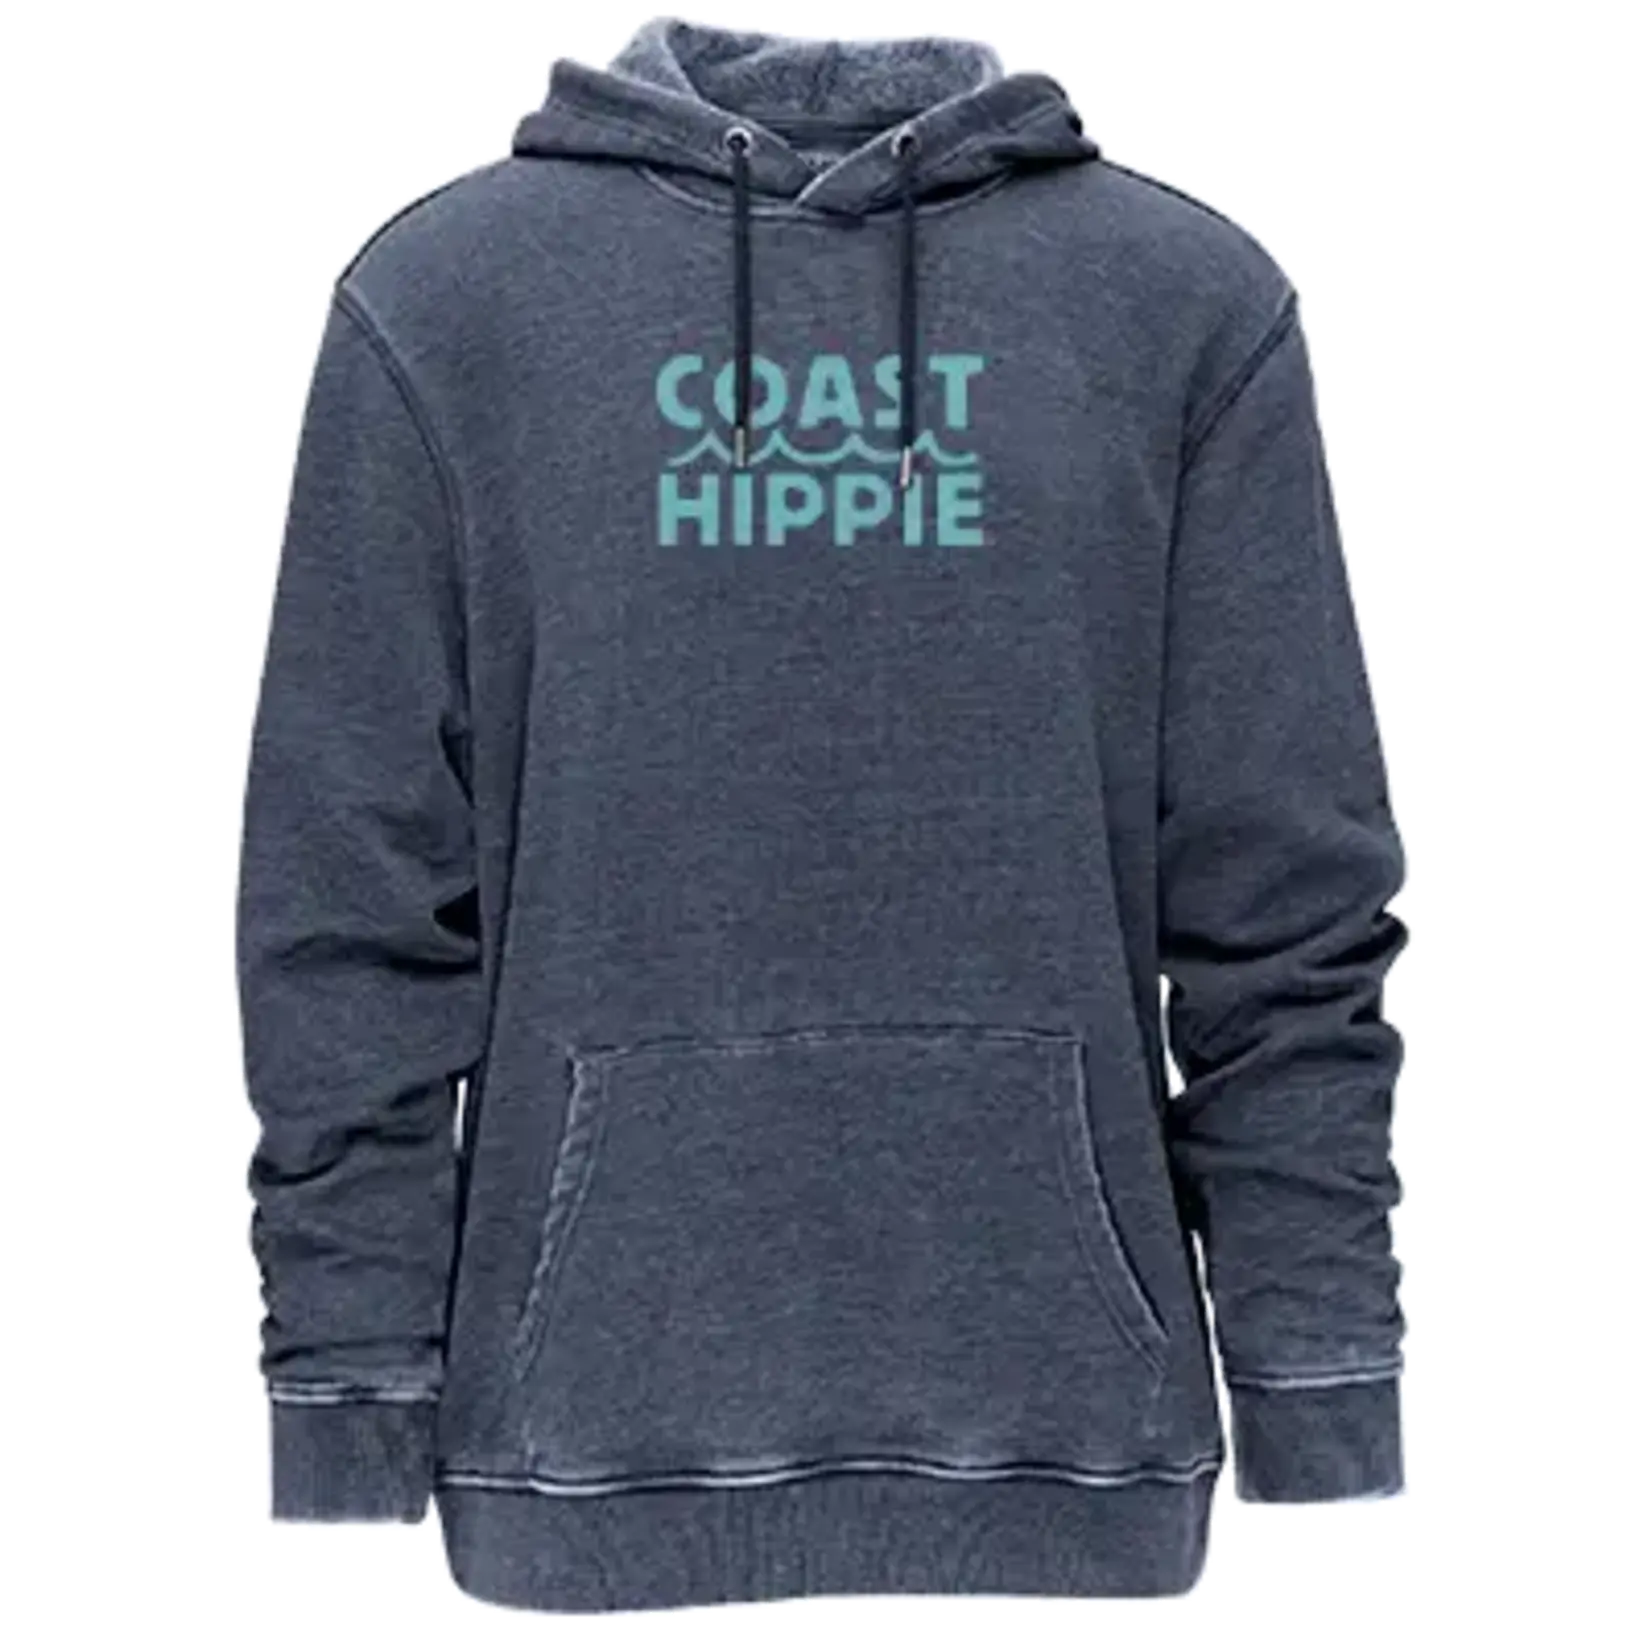 Coast Hippie Logo Vintage Hoodie